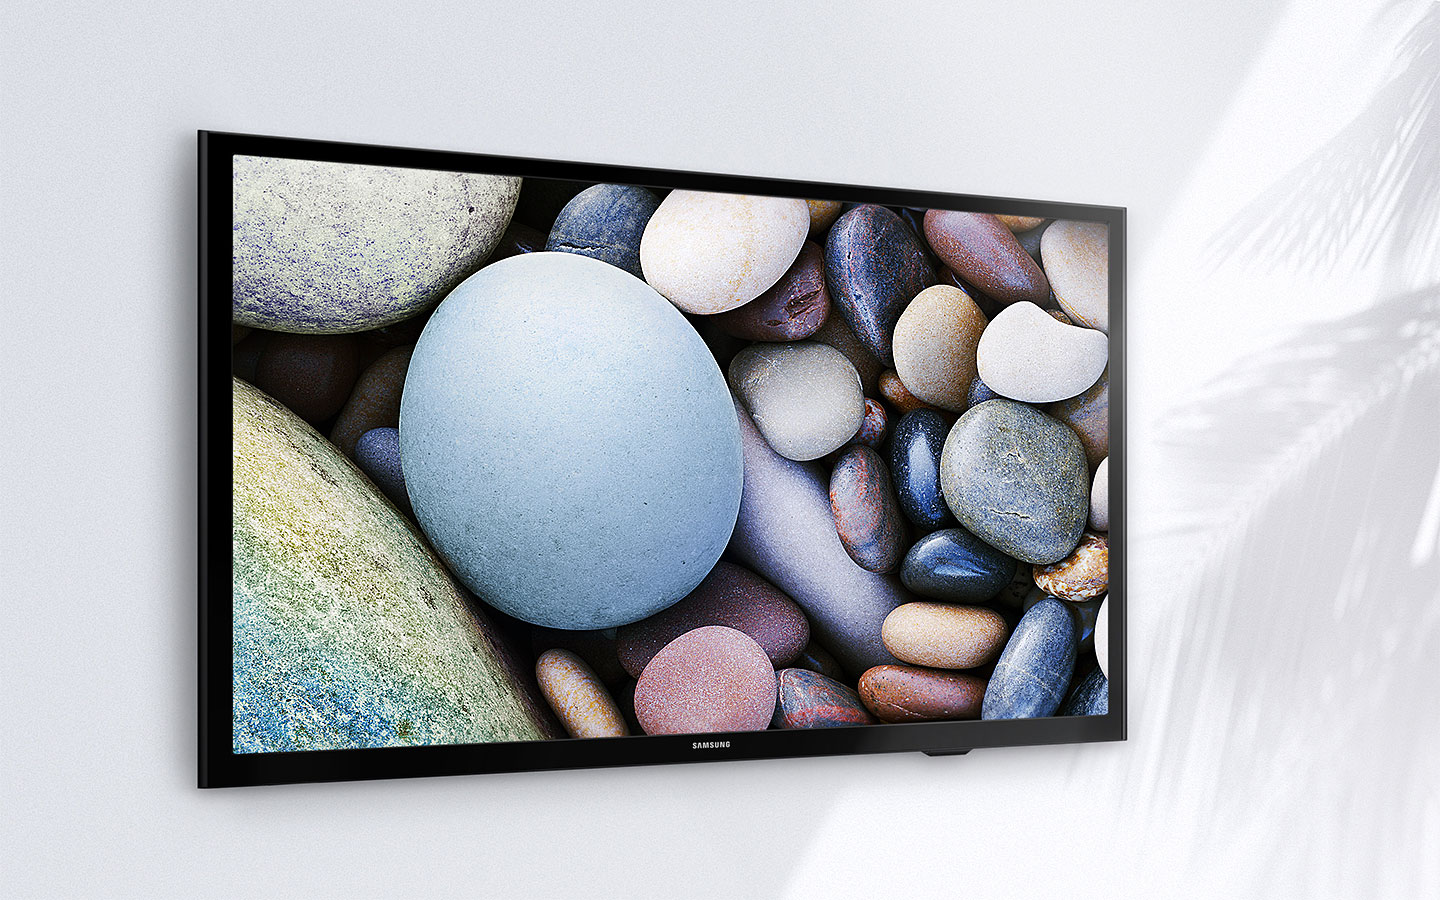 Samsung UN32M4500 - Televisor LED inteligente de 32 pulgadas 720p + kit de  montaje en pared plana delgado para televisores de 19 a 45 pulgadas +